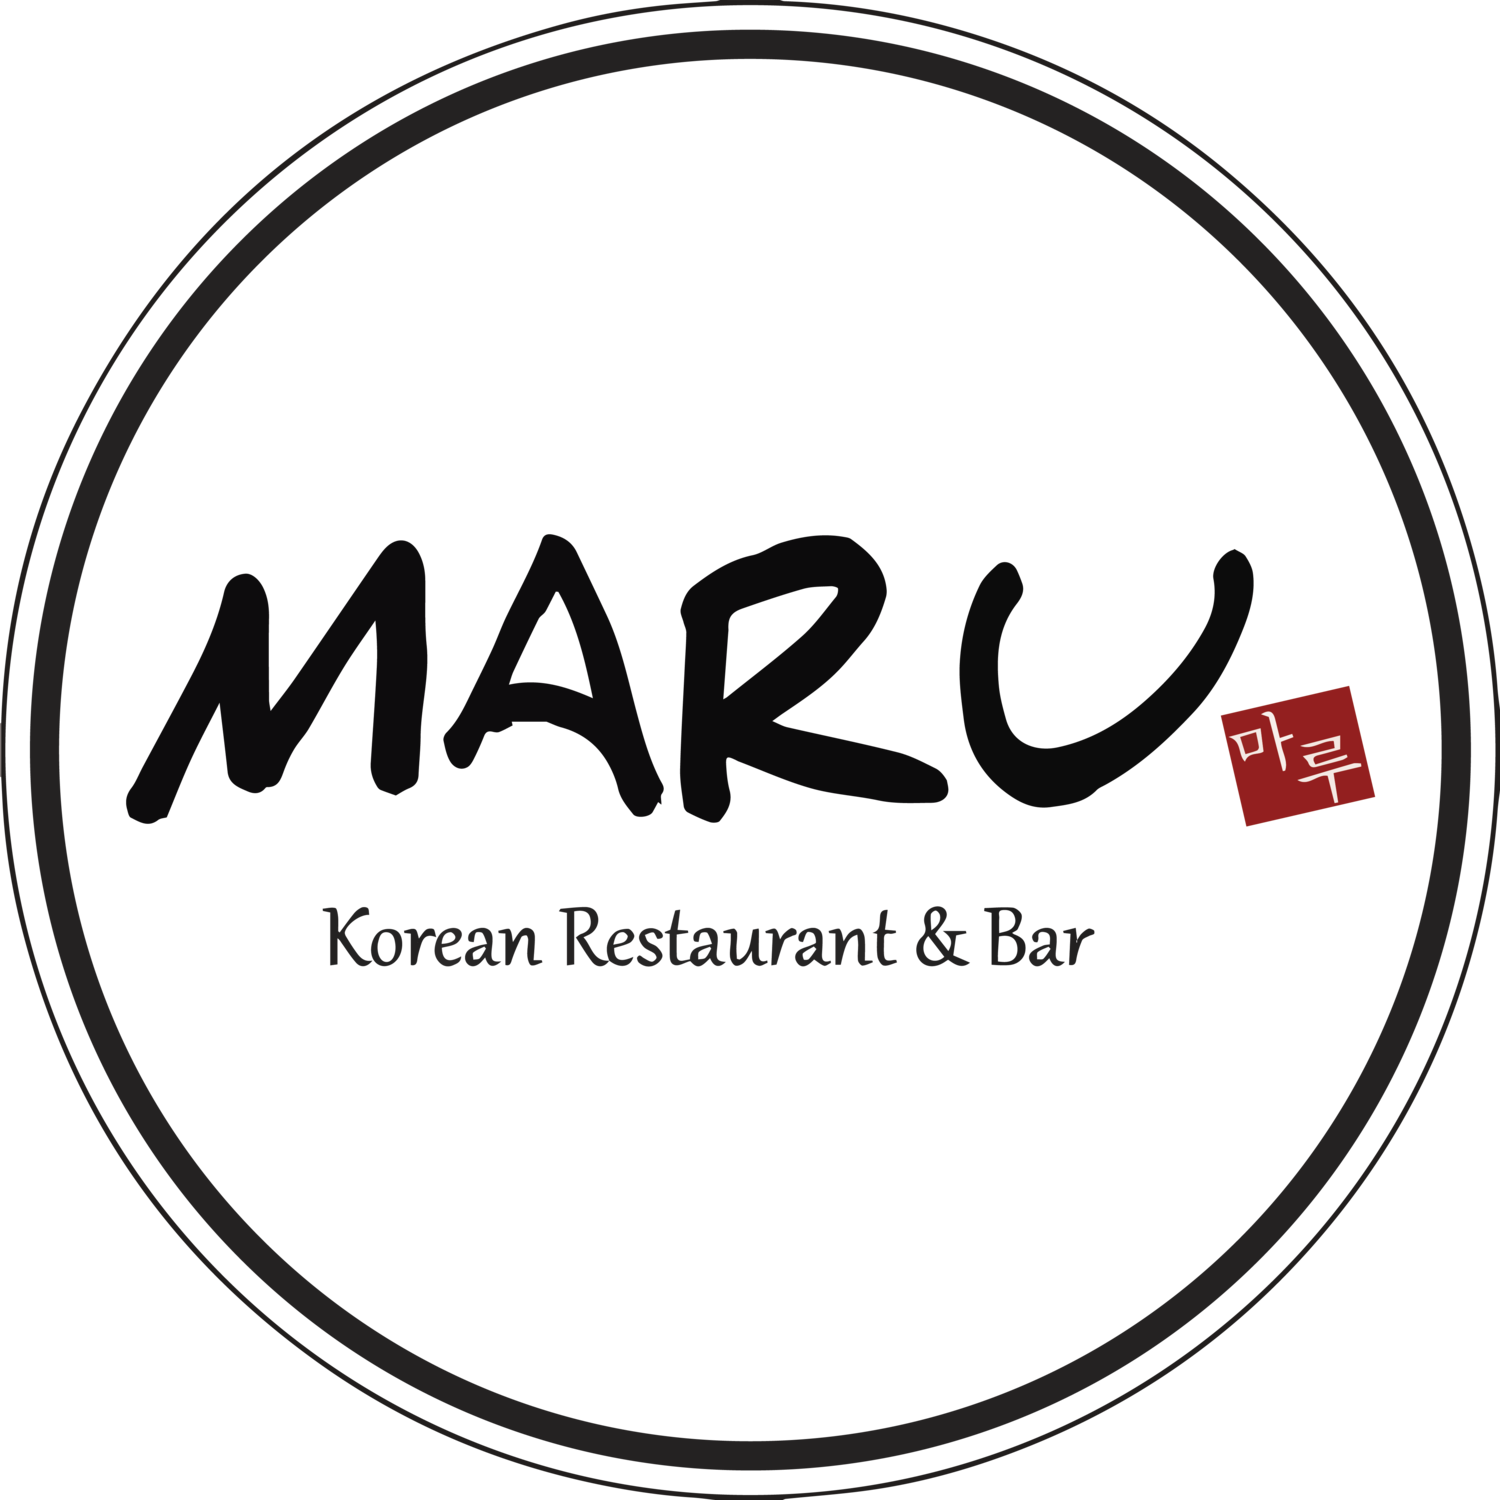 MARU Korean Restaurant and Bar